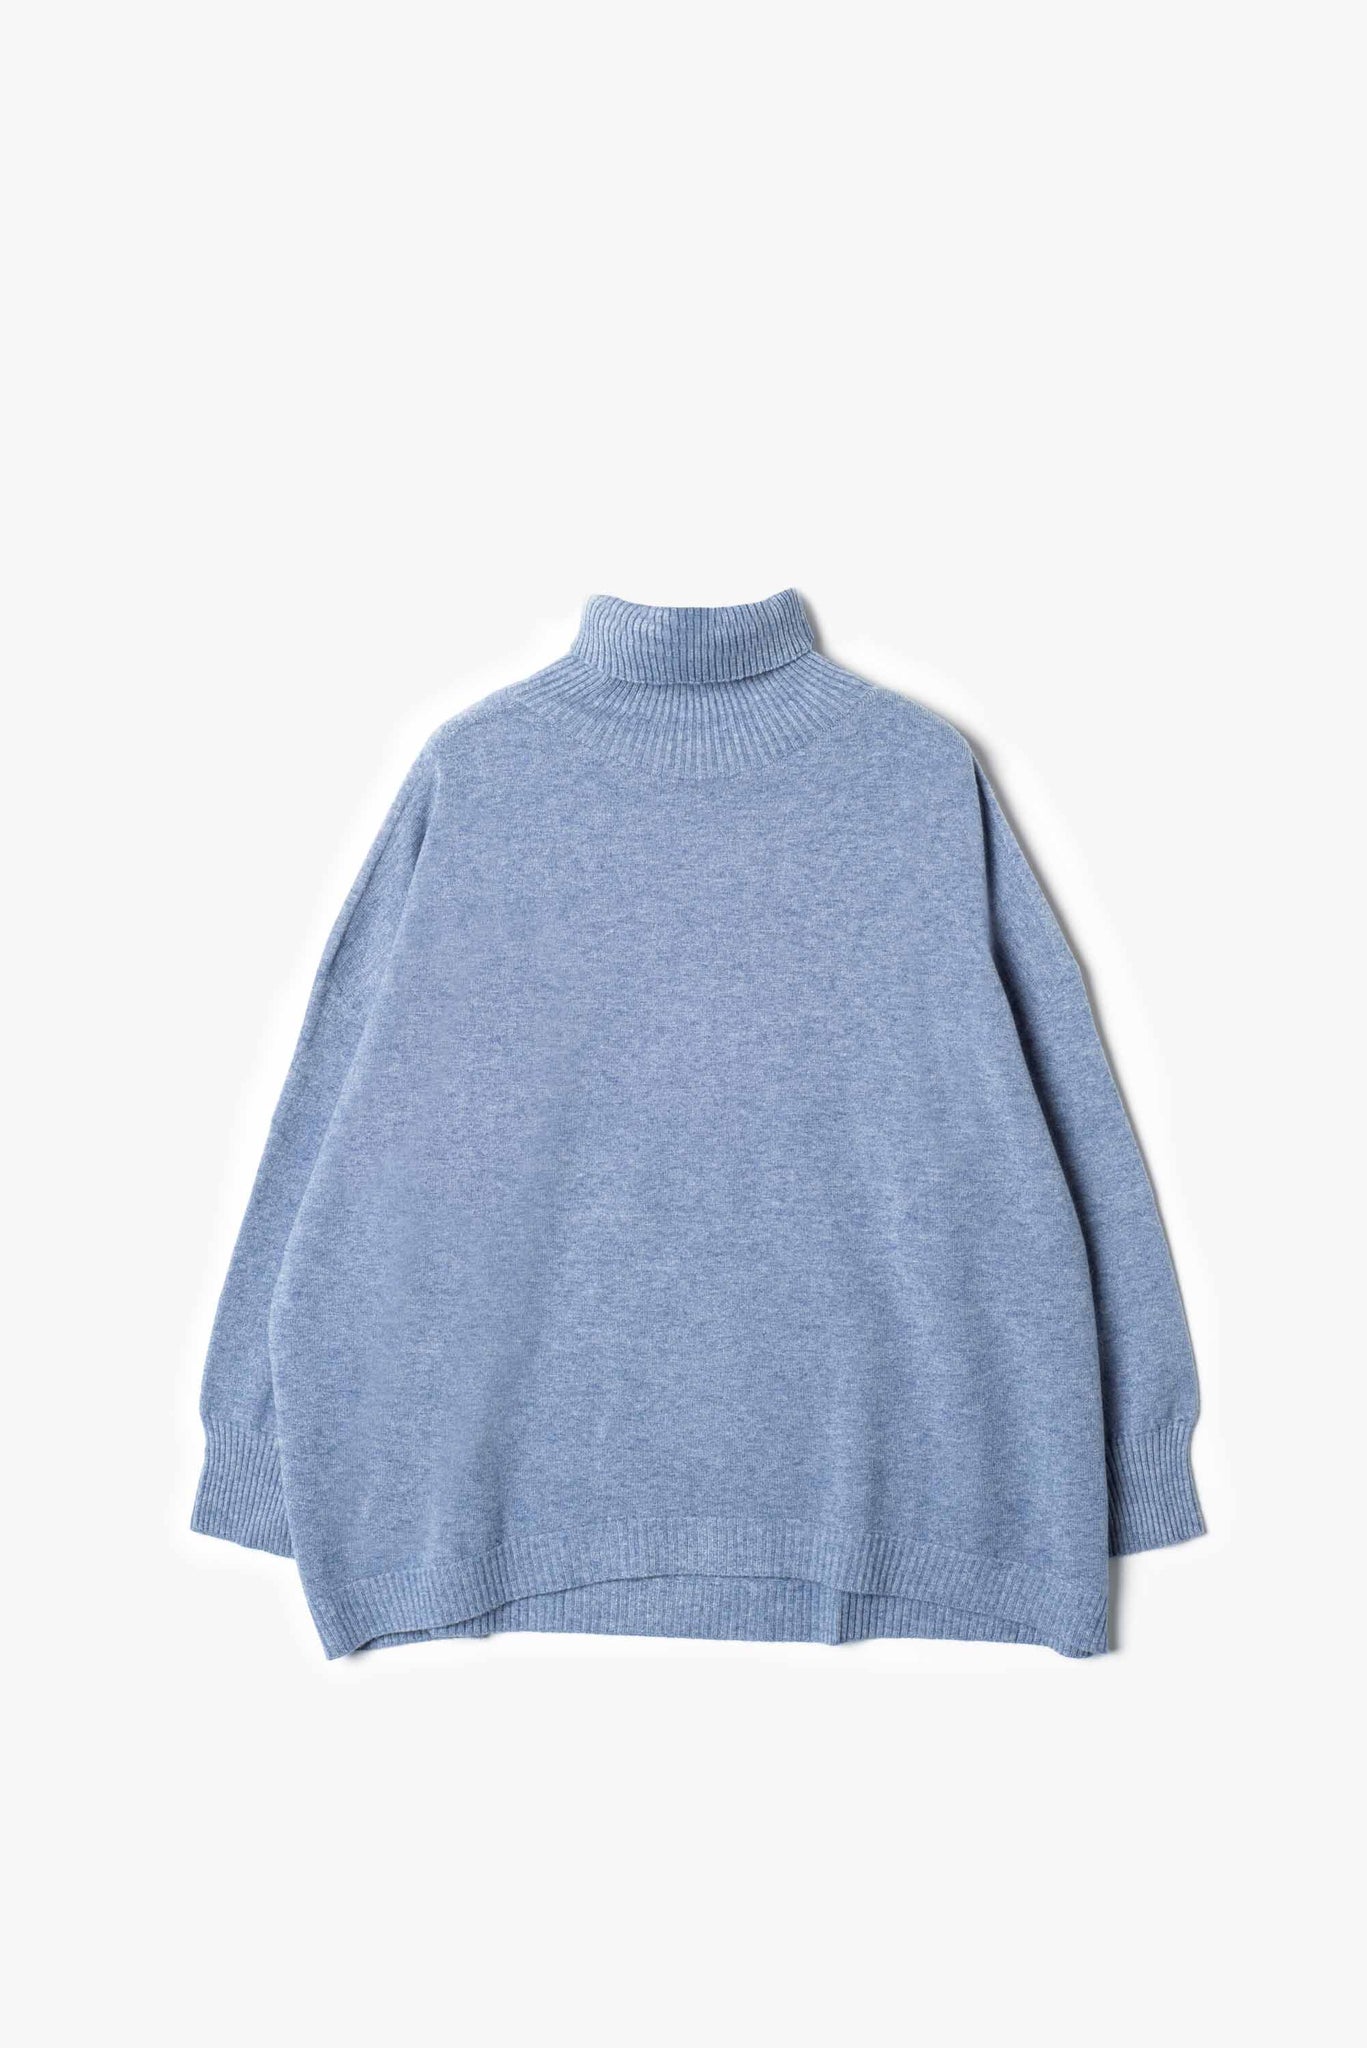 Asymmetric turtleneck sweater.